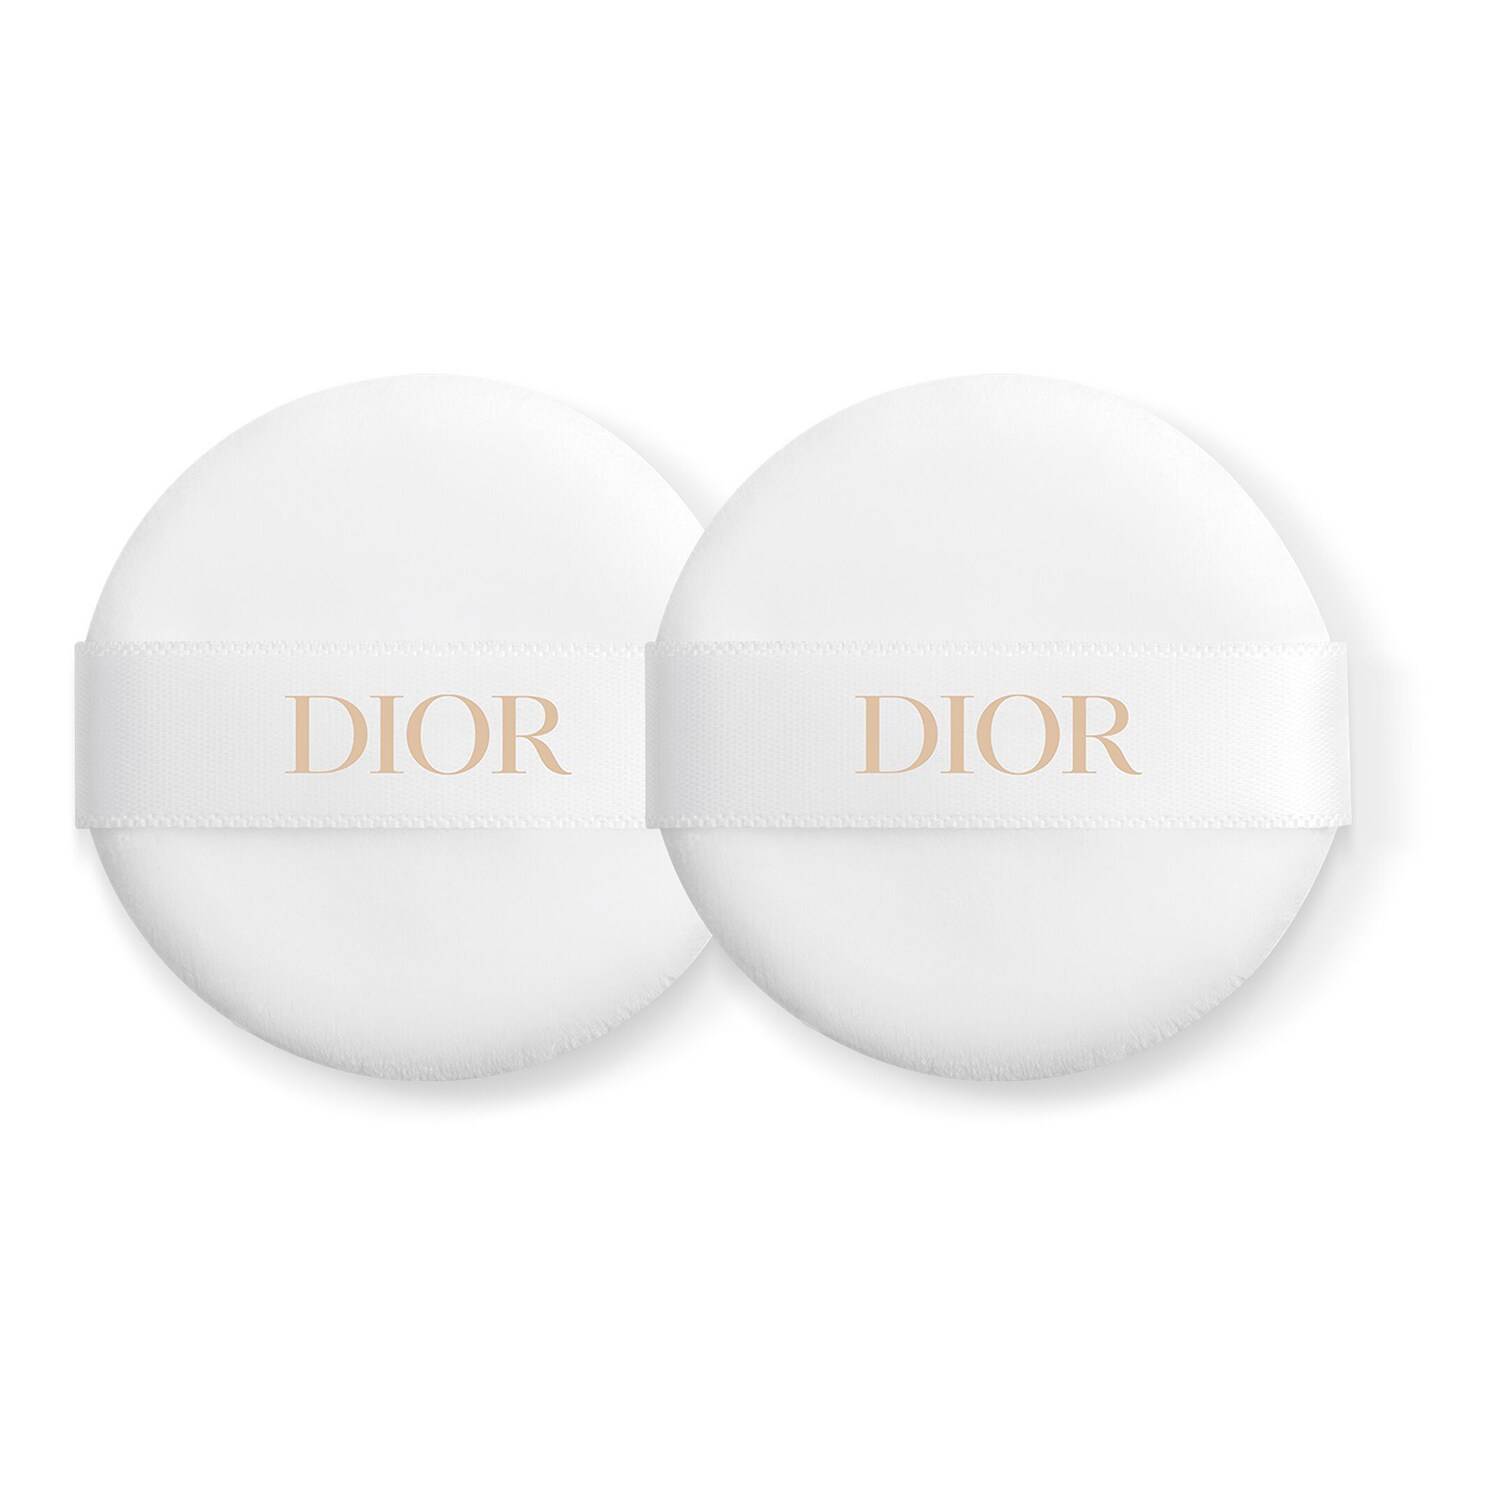 Dior Forever Cushion Powder Applicator 6G